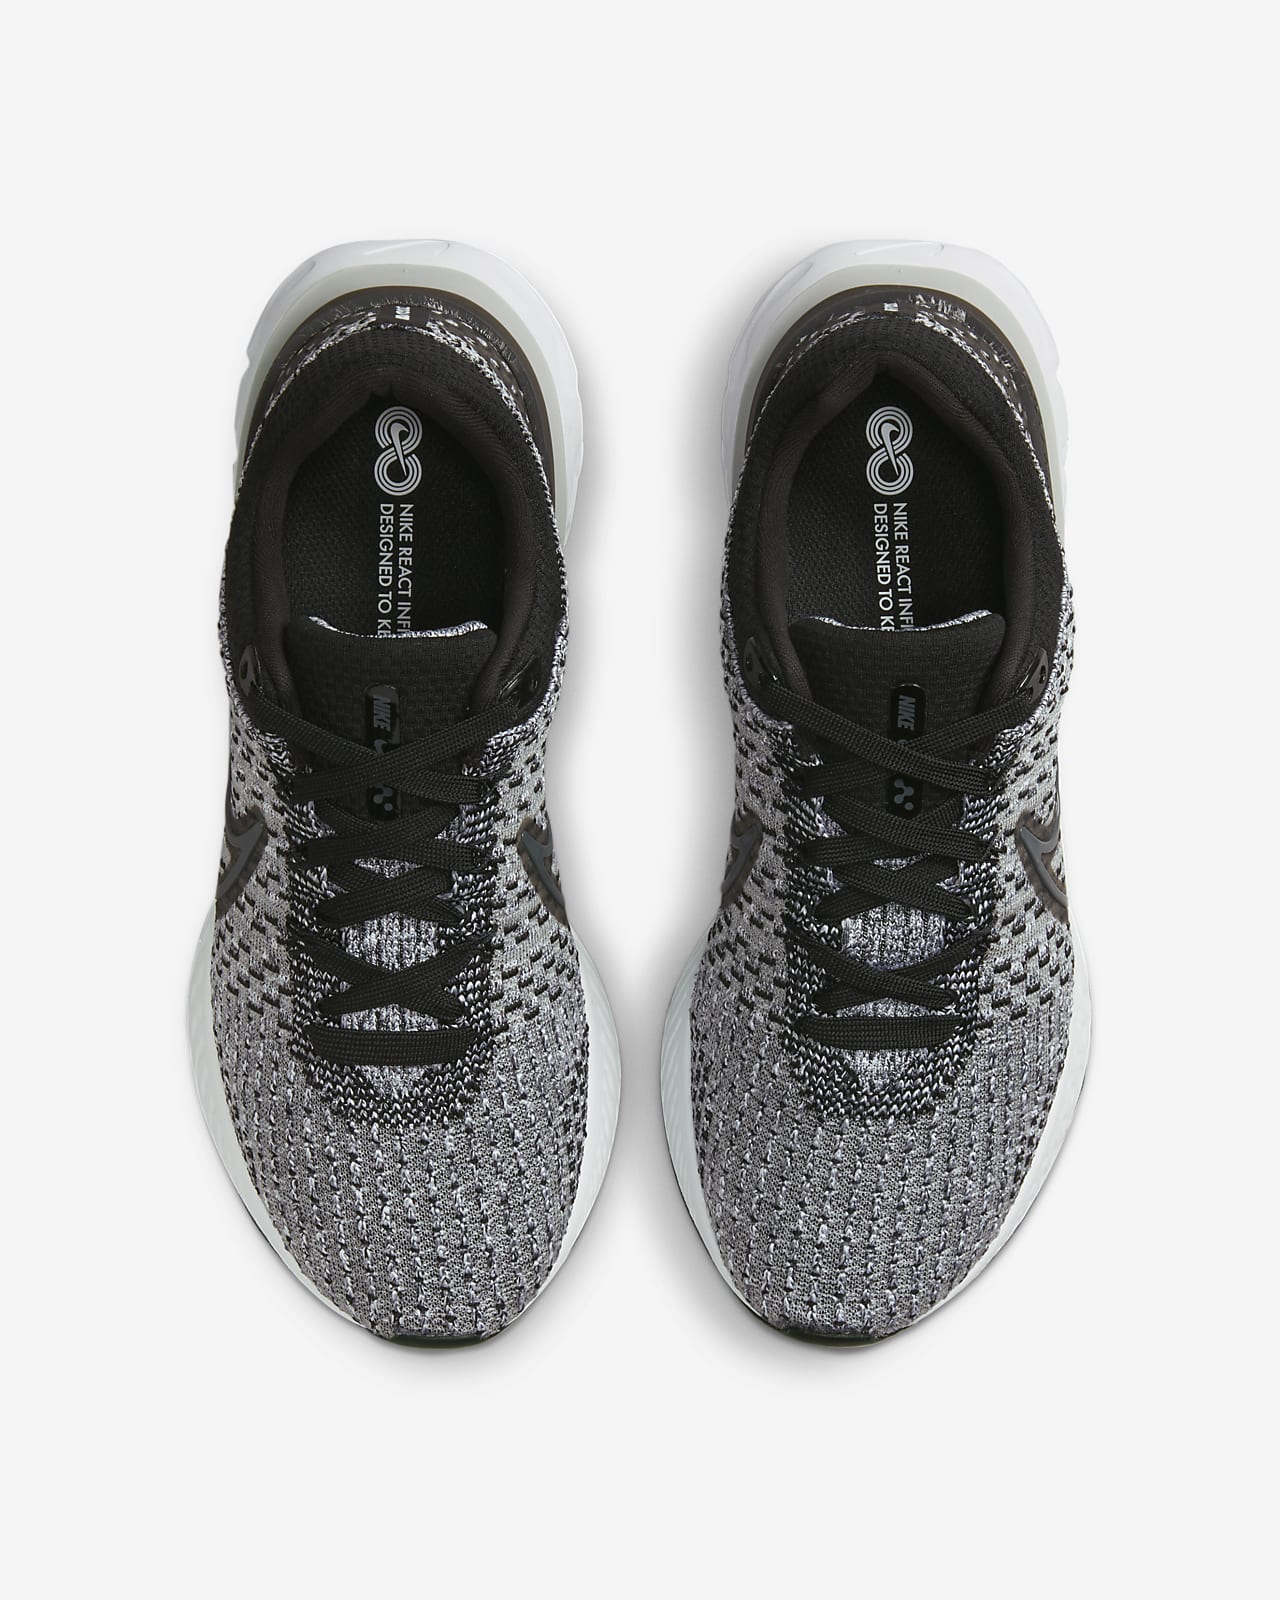  Nike Women's React Infinity Flyknit 3 Running Shoes, Black/DK  Smoke Grey-Grey Fog, 5 M US